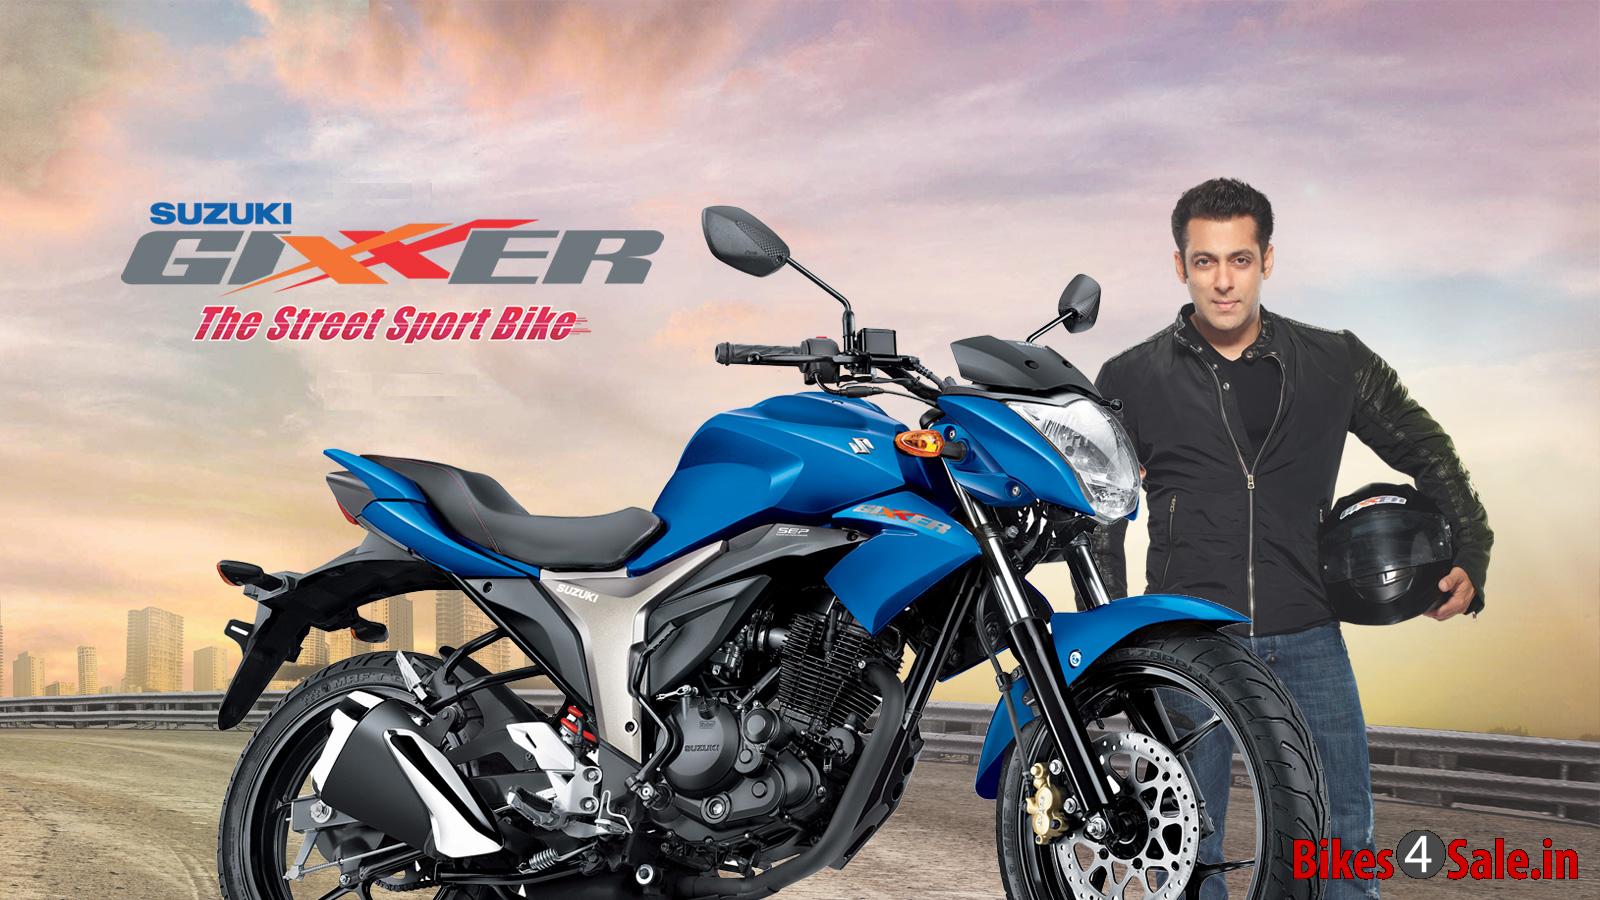 Suzuki Gixxer 150 - Bollywood superstar Salman Khan with Suzuki Gixer 155 motorcycle